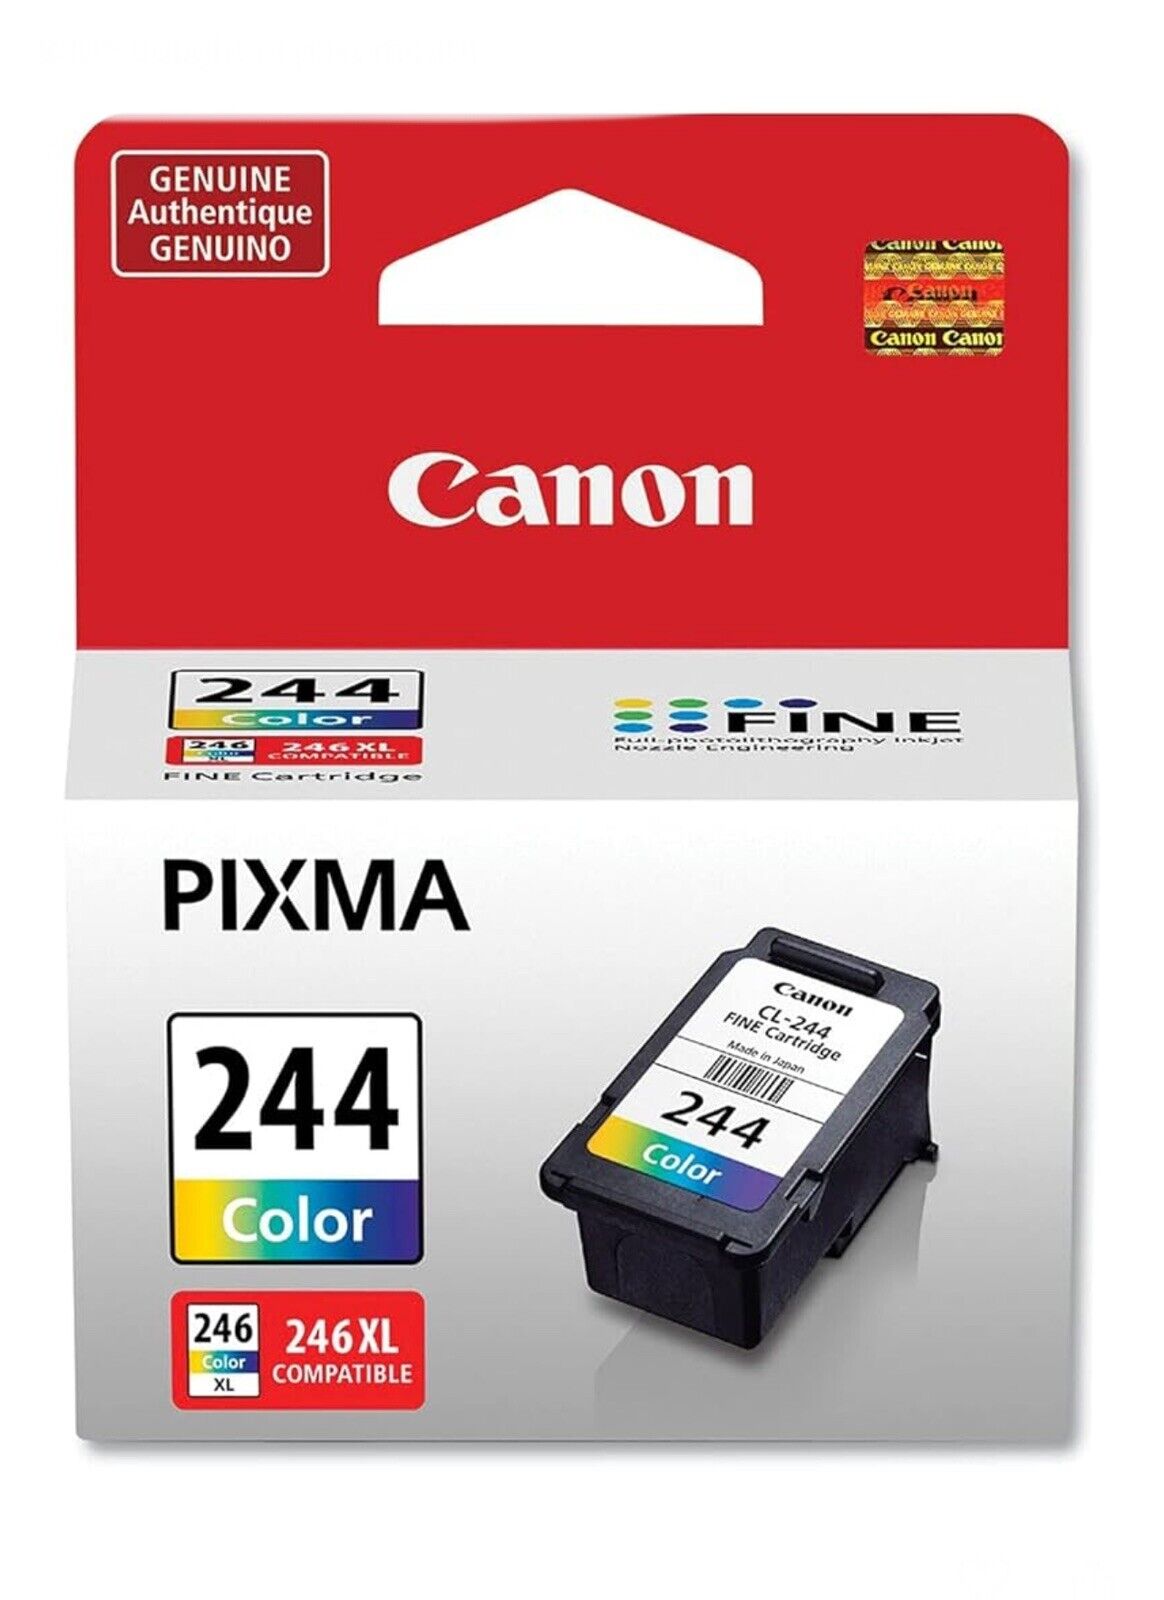 Genuine Canon CL-244 Color ink cartridge for Pixma printer